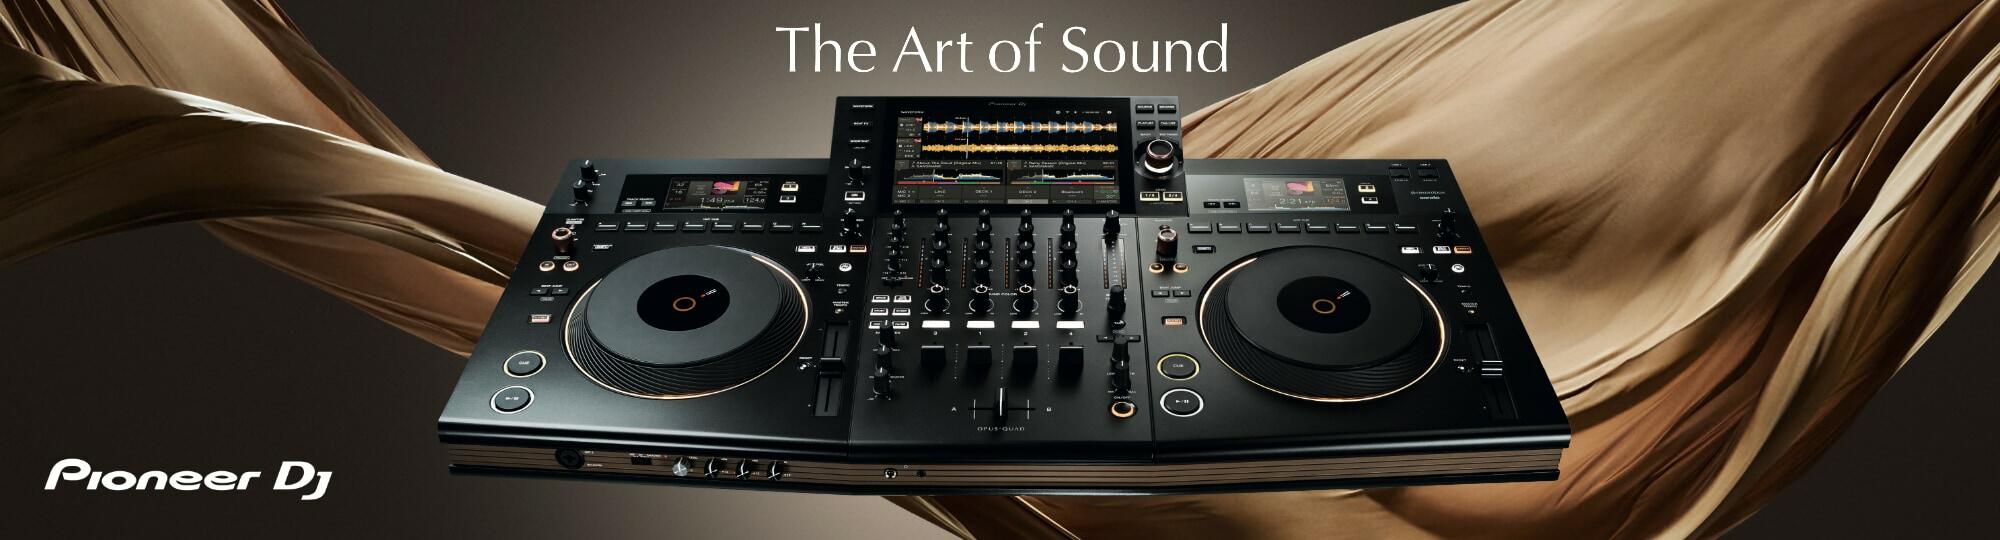 Pioneer DJ OPUS-QUAD - The Art of Sound